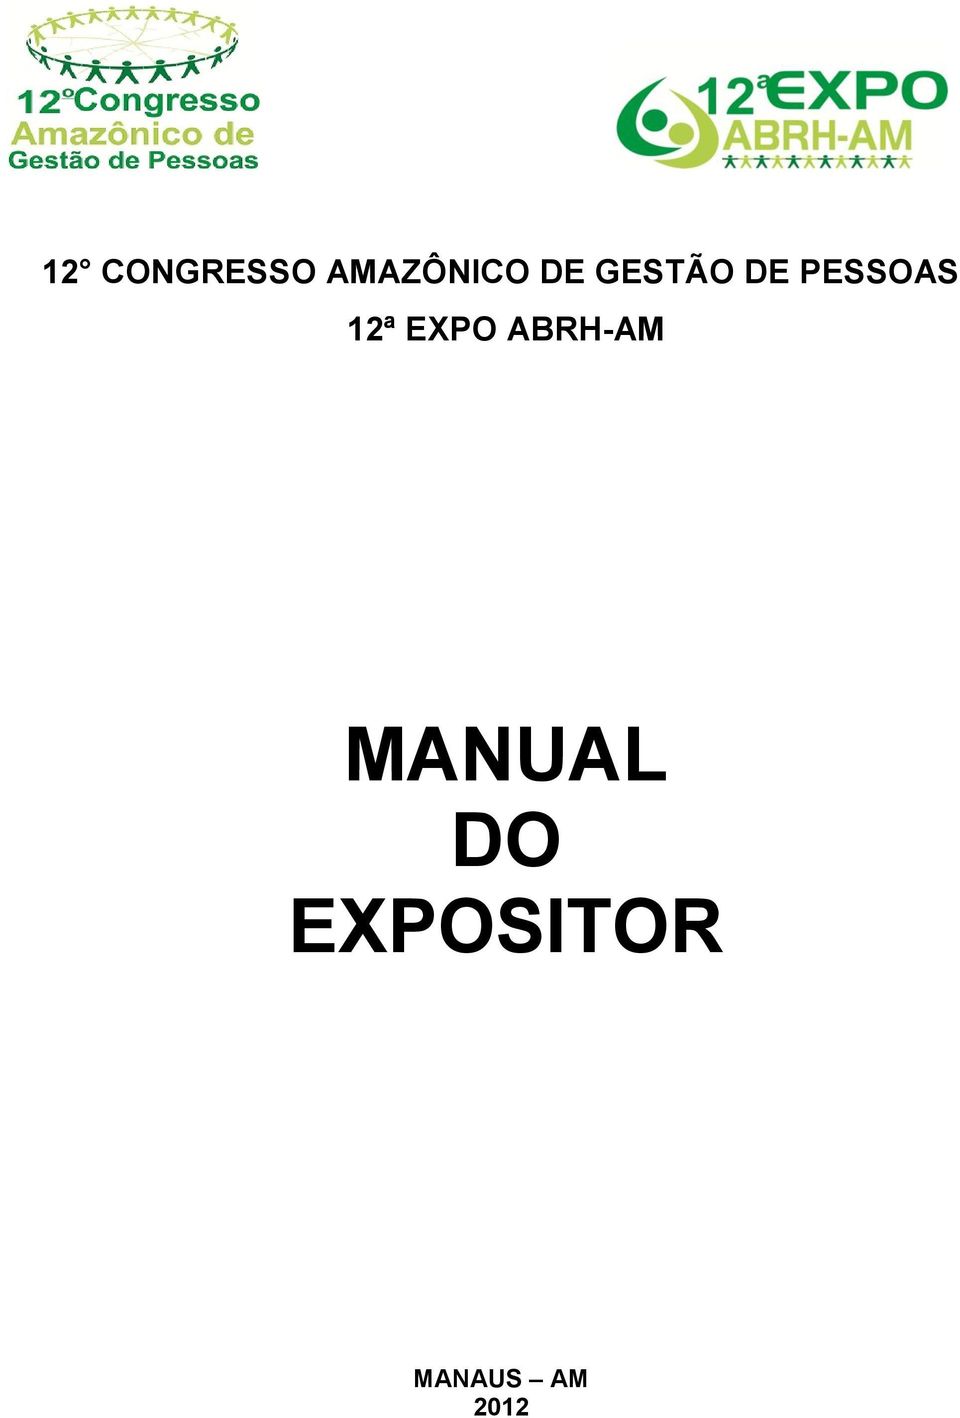 12ª EXPO ABRH-AM MANUAL